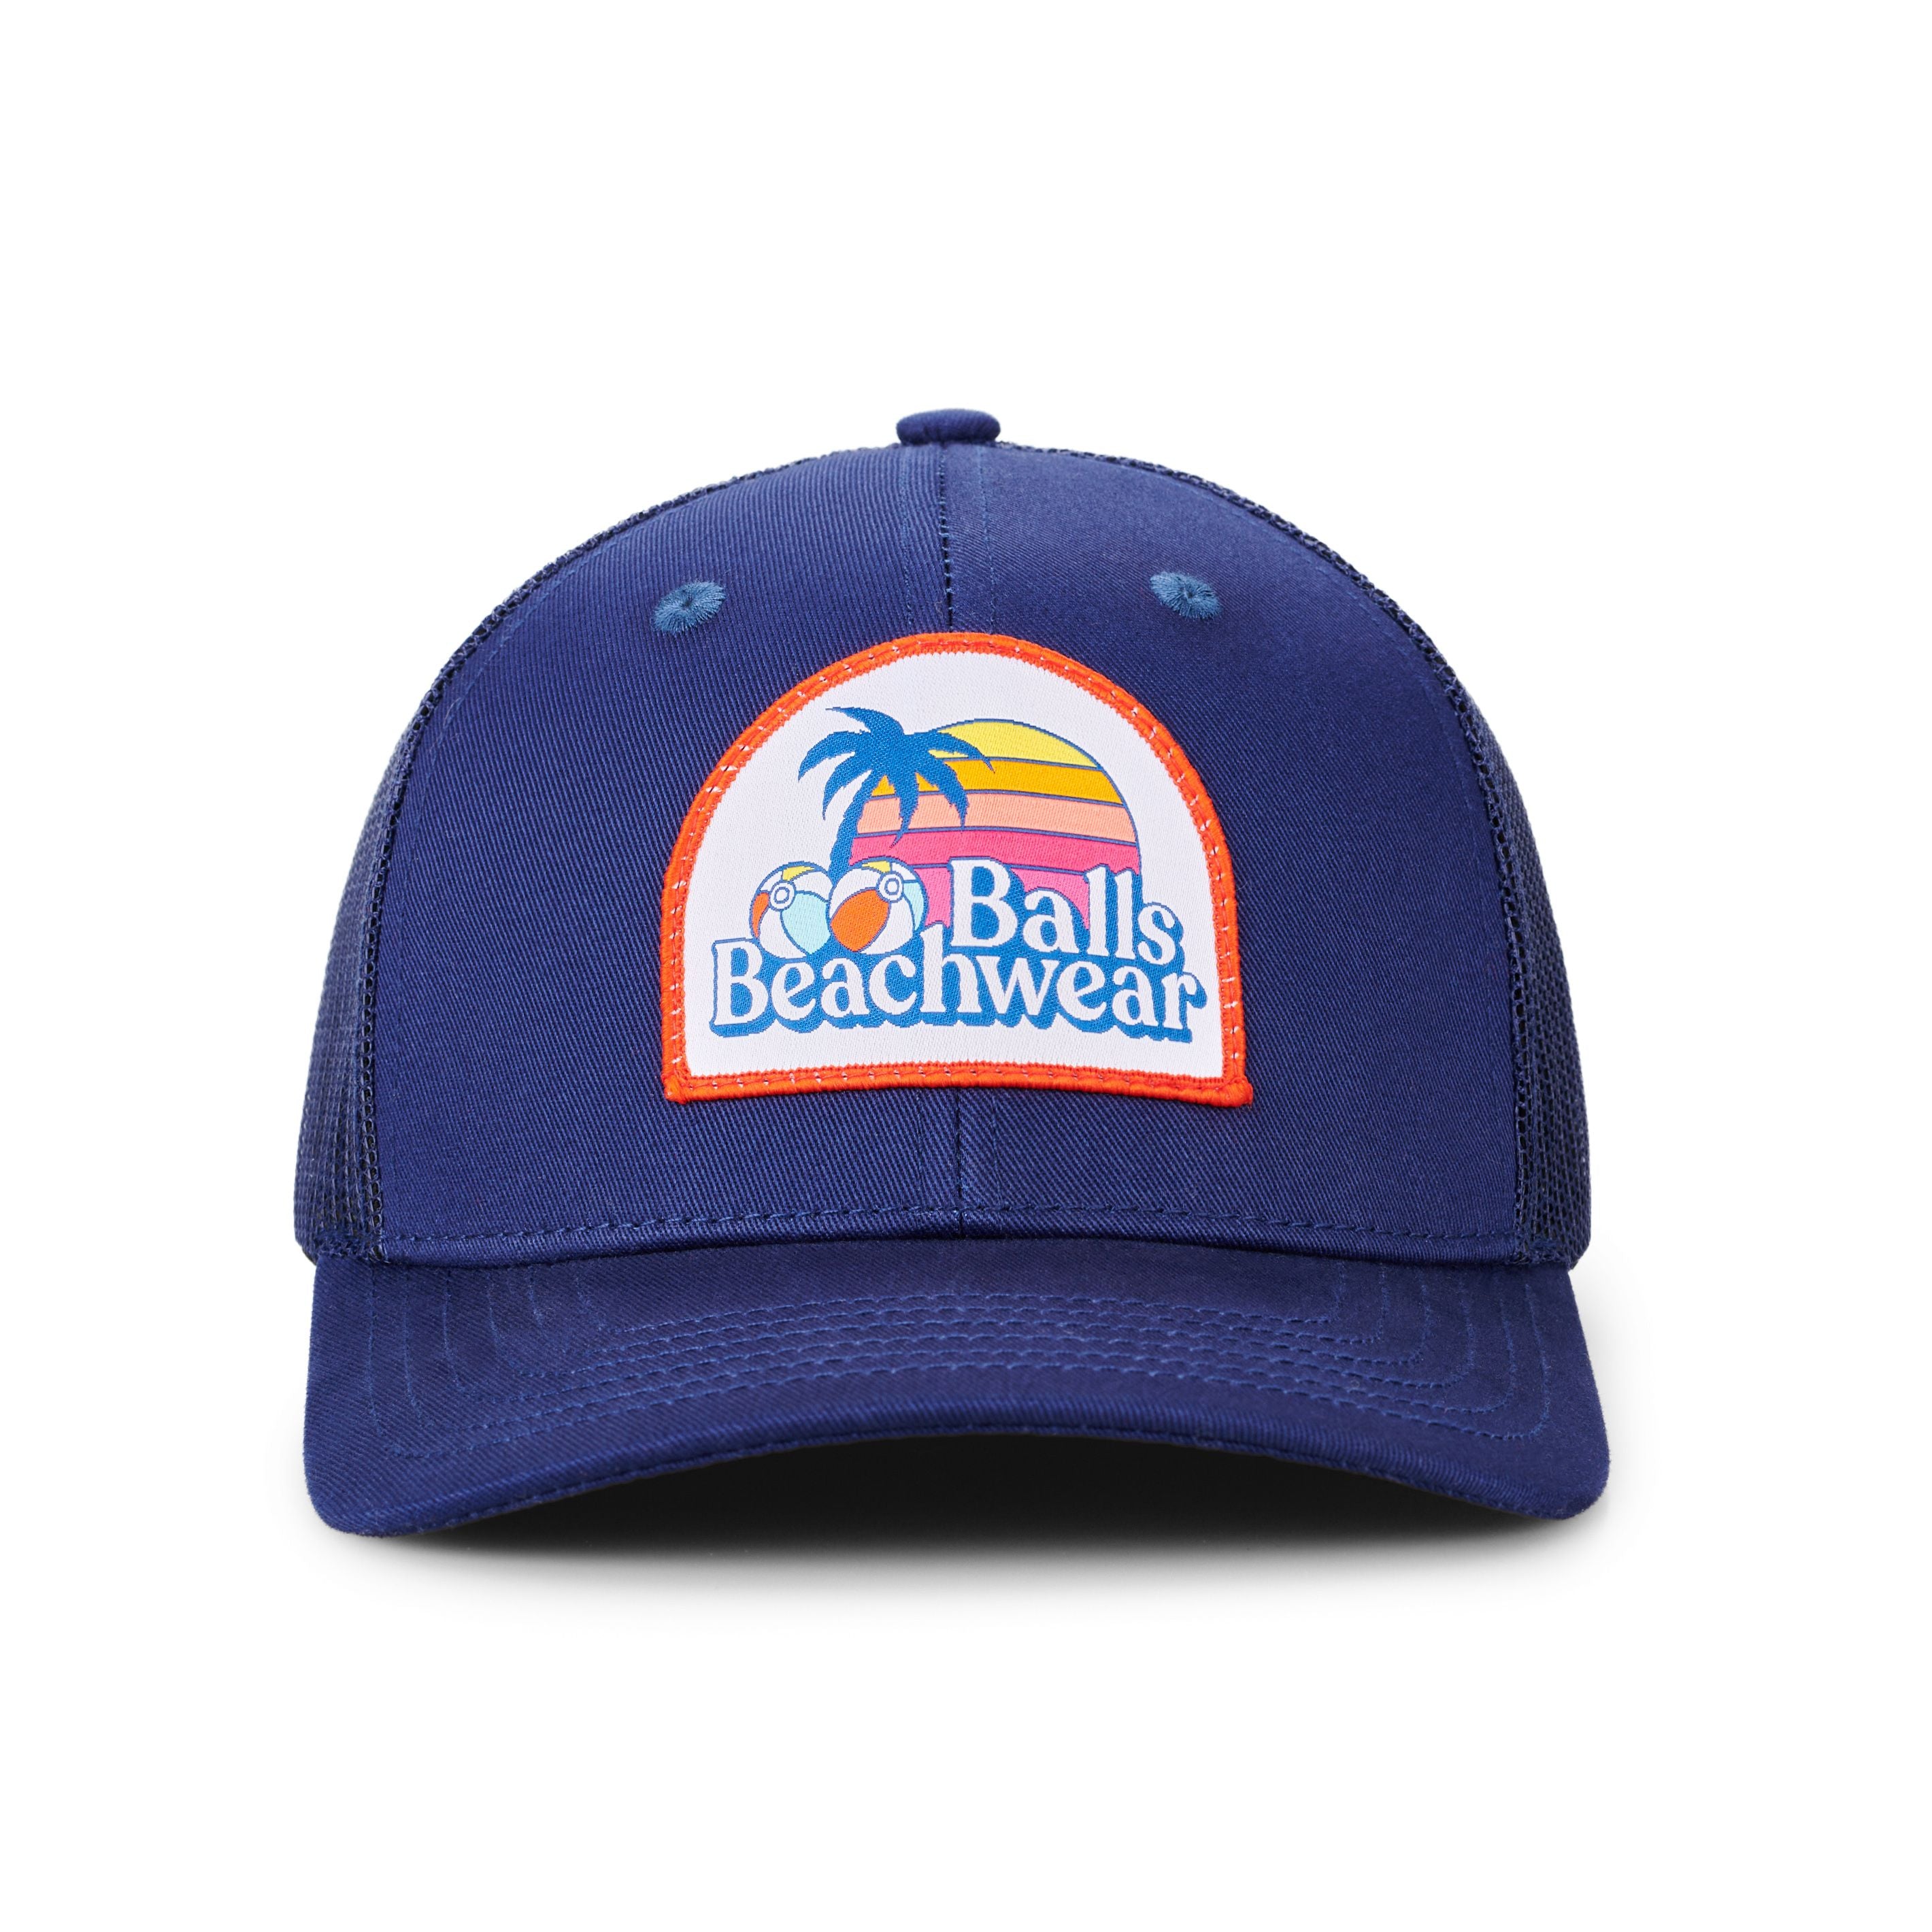 Balls Beachwear Sunset Patch Trucker Hat-Hats-Balls Beachwear-One Size-Navy-Barstool Sports